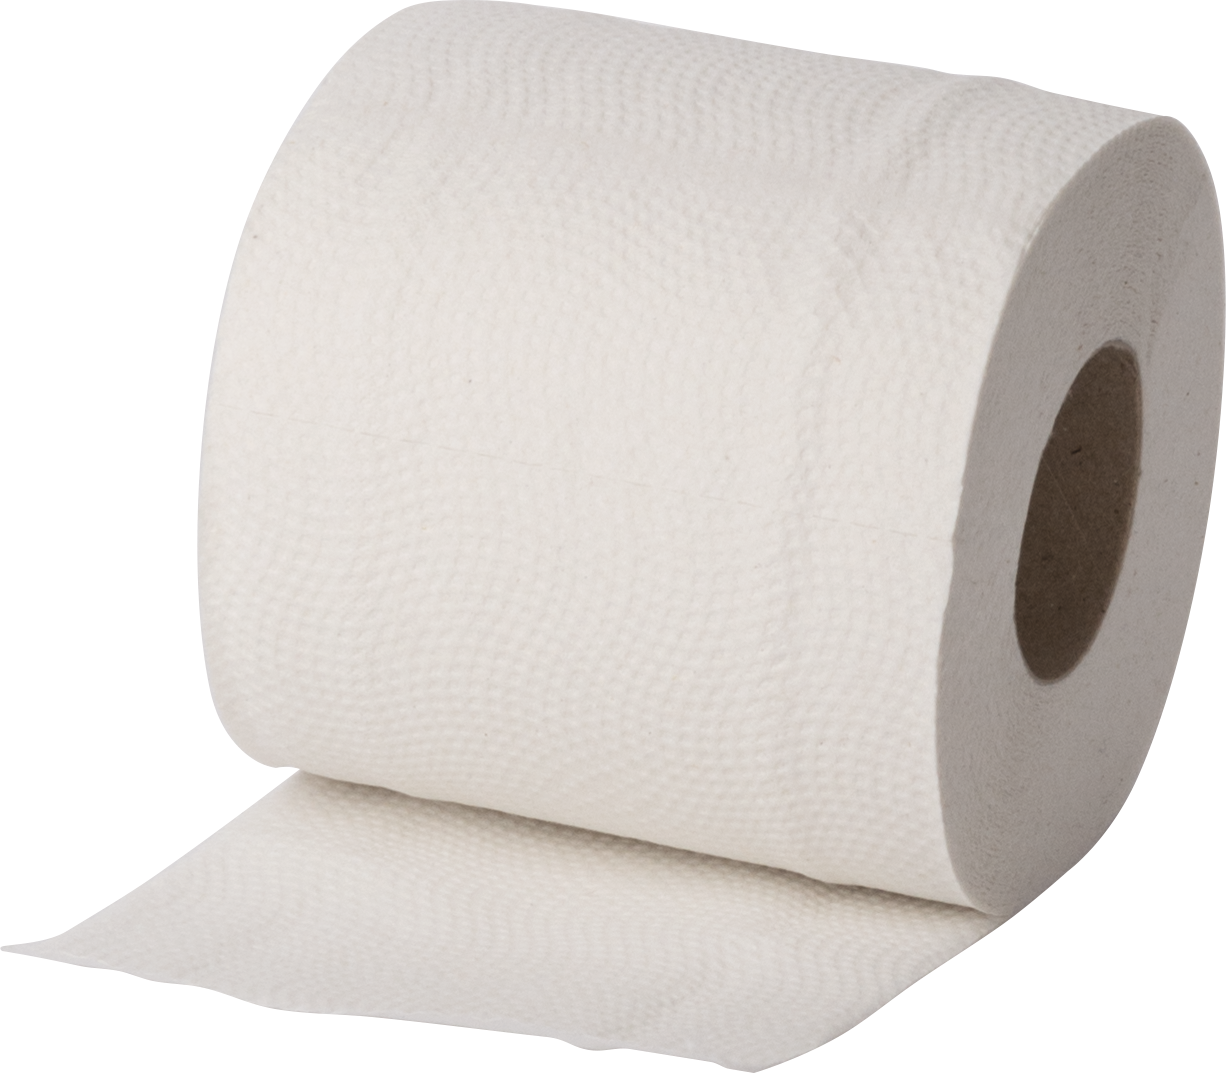 Toilettenpapier weiß 2-lagig 250 Blatt 23,5x34cm perforiert